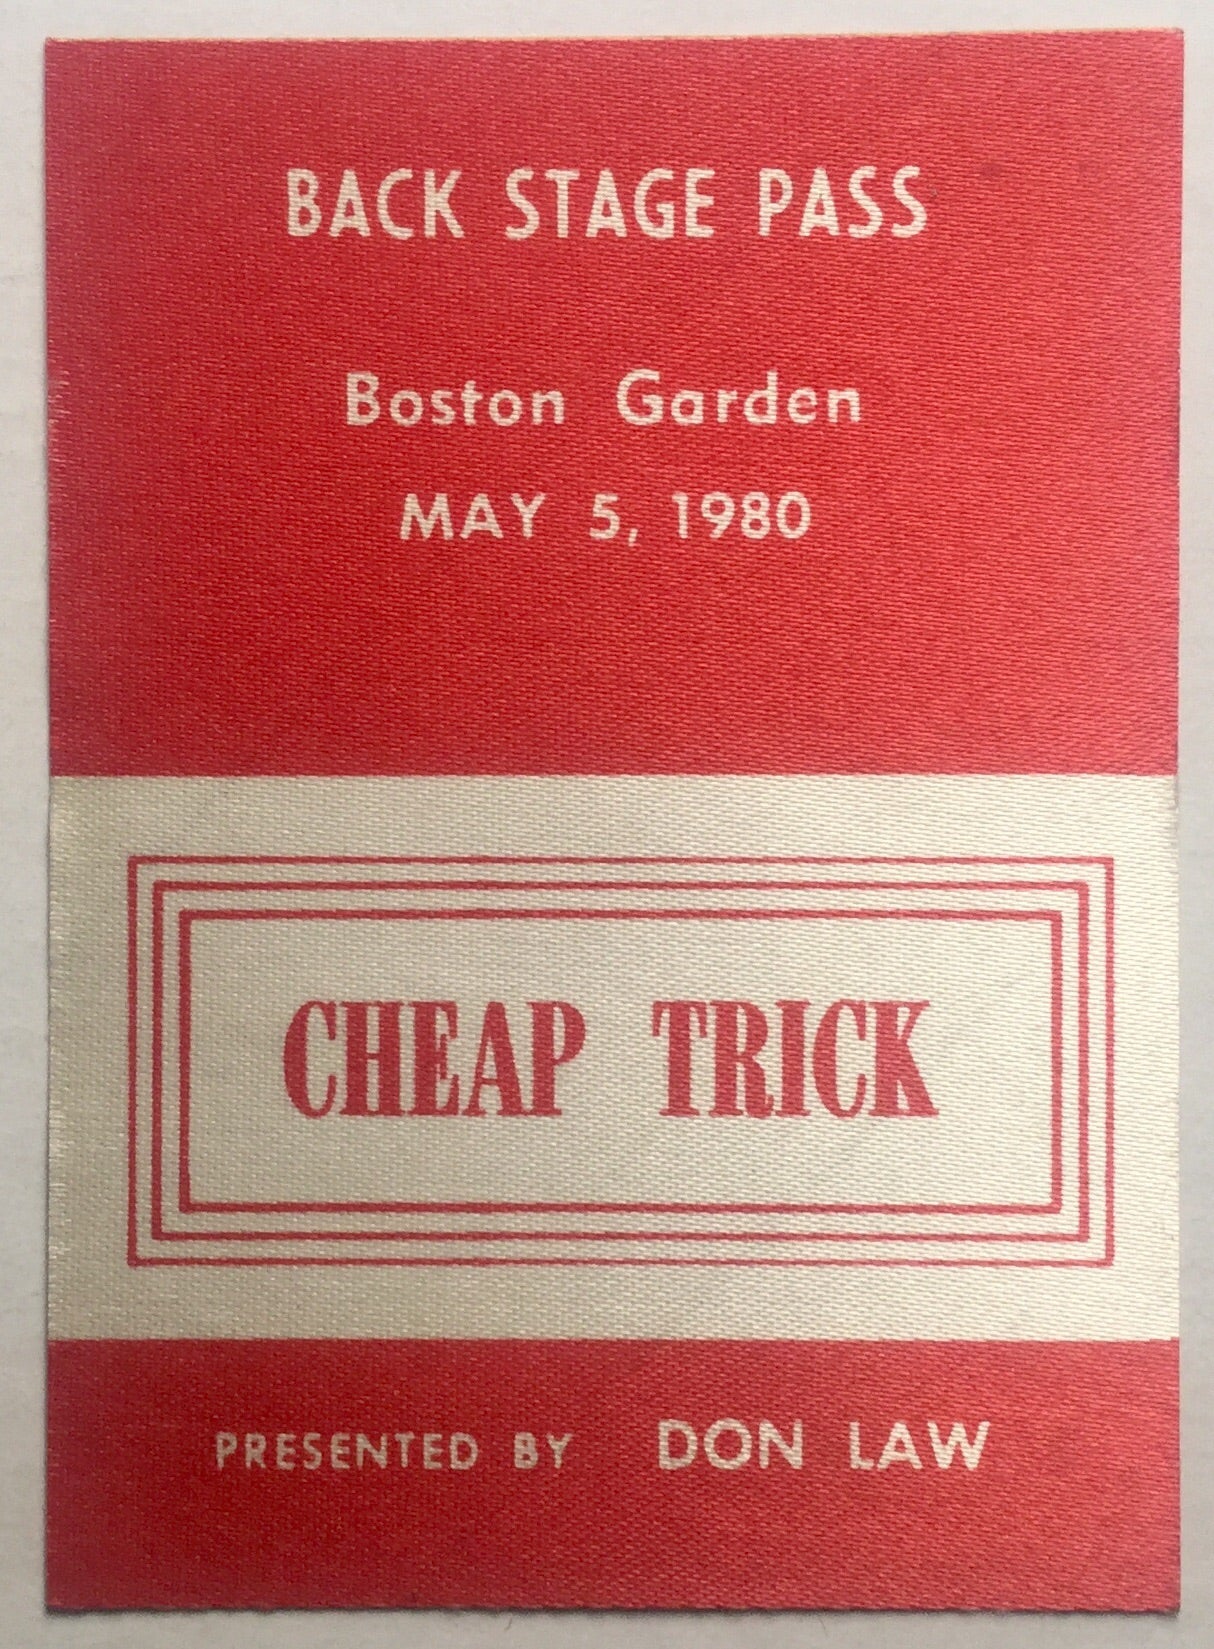 Cheap Trick Original Unused Concert Backstage Pass Ticket Boston Garden 5th May 1980